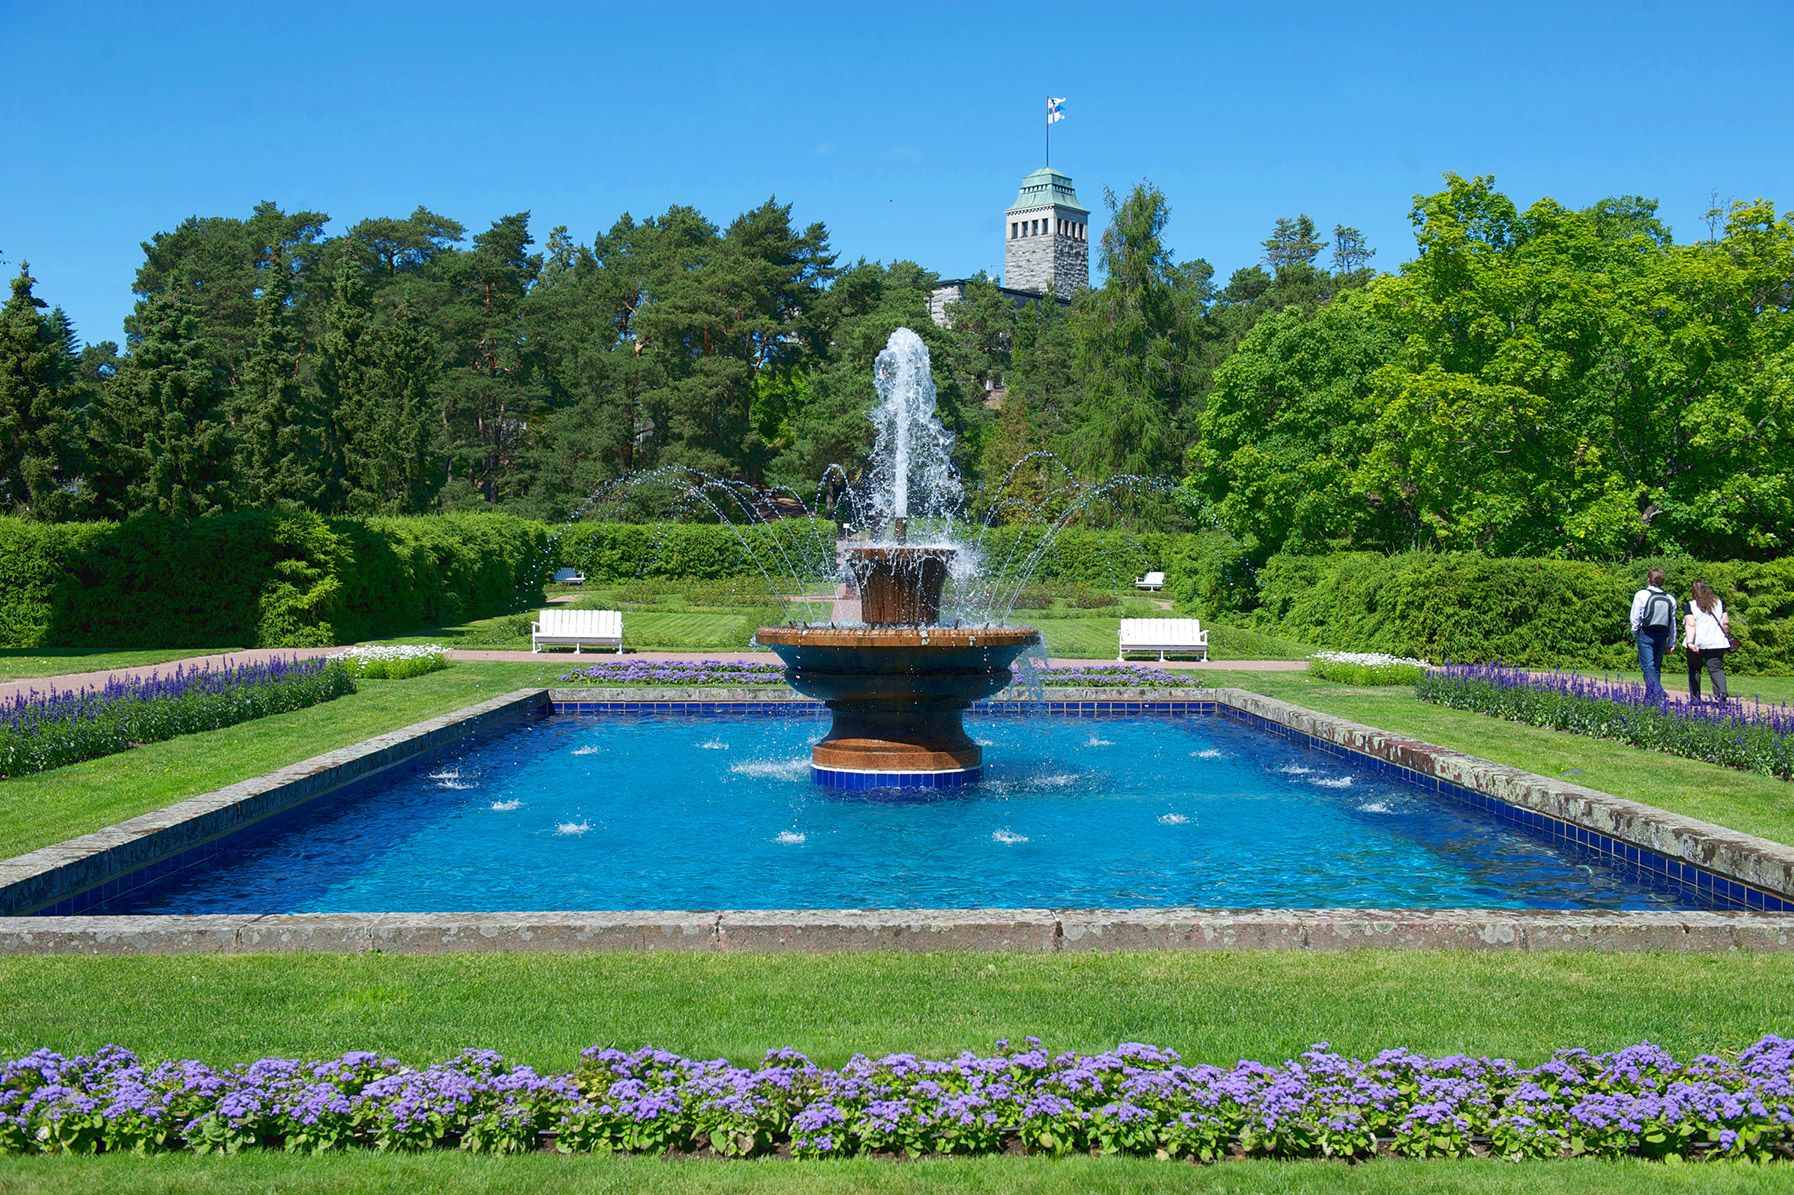 Visitors walk by a fountain in the Kultaranta garden.